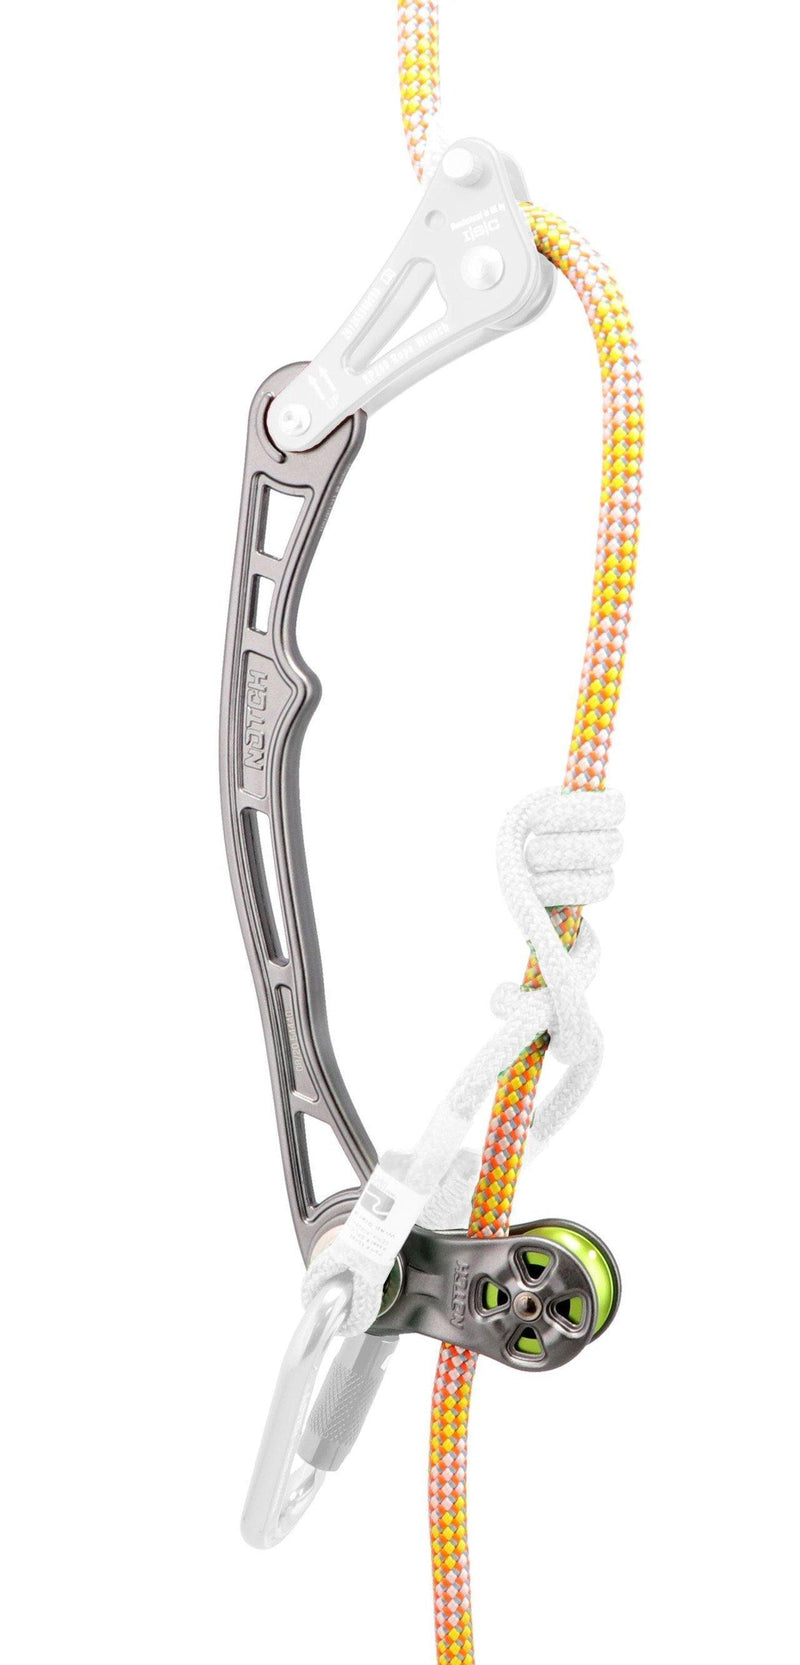 Resmi Galeri görüntüleyicisine yükle, Fusion Rope Wrench Tether - NOTCH - ExtremeGear.org
